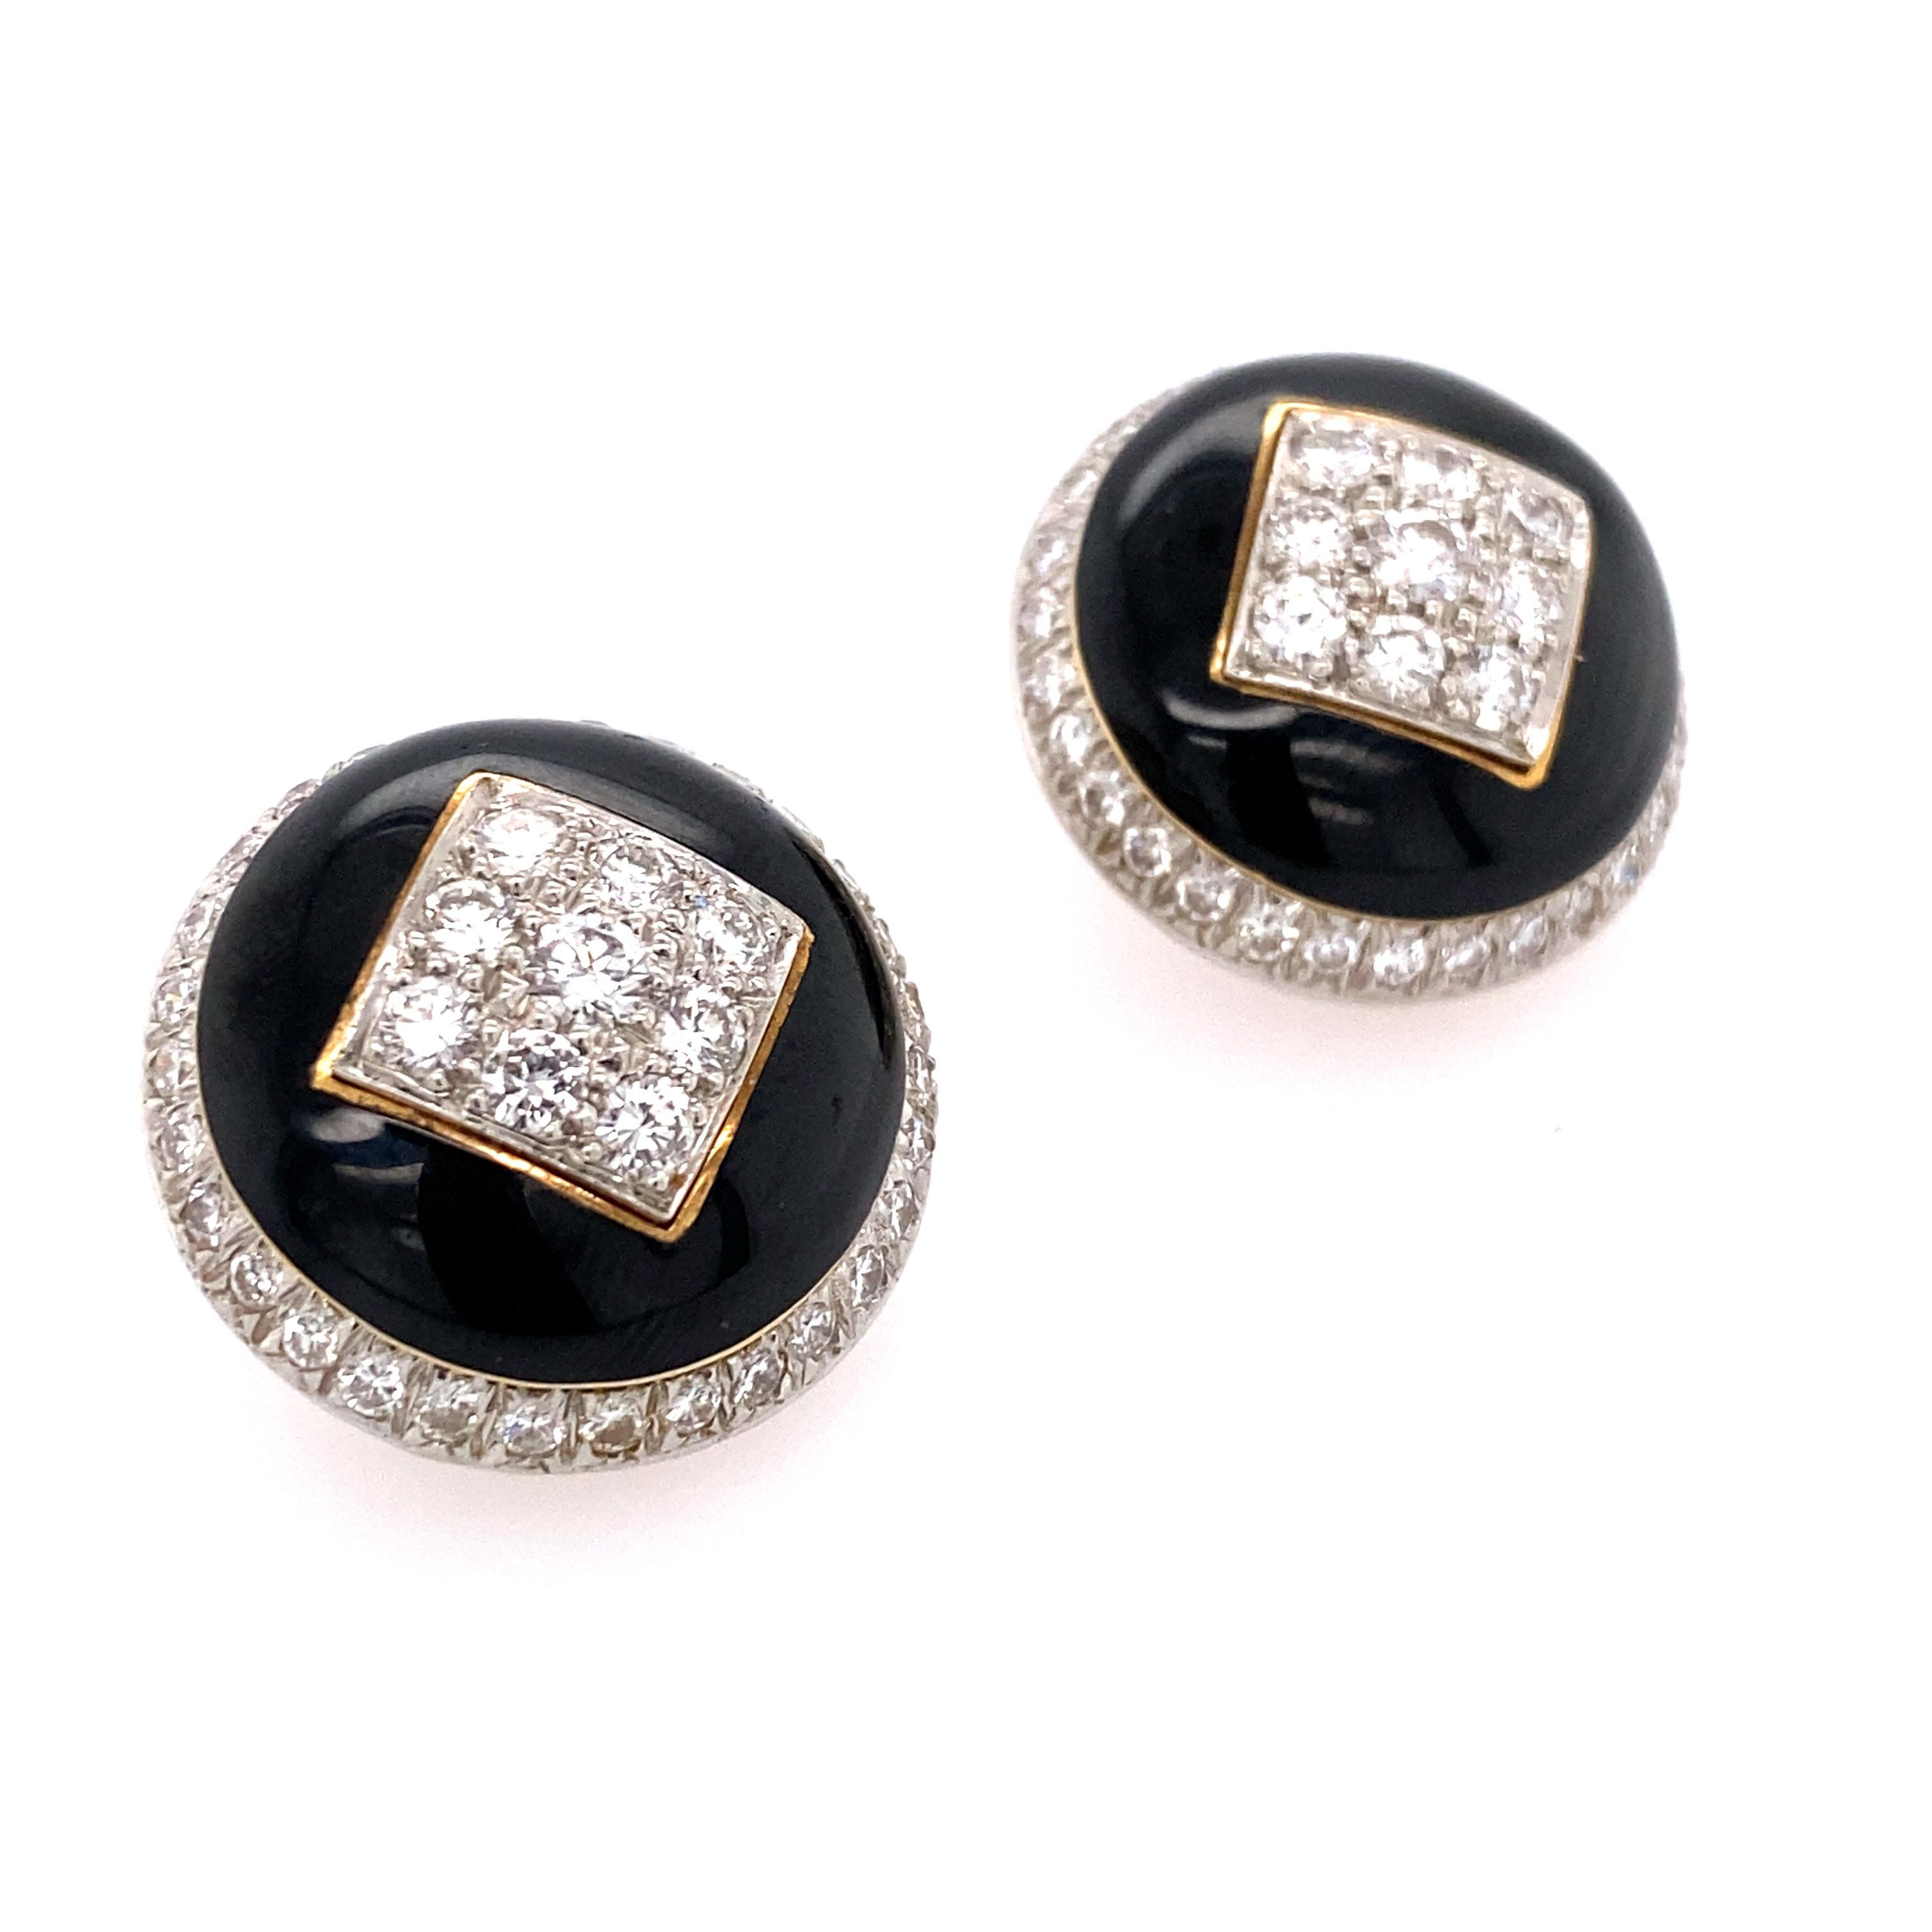 David Webb 18k Yellow Gold, Platinum and Black Enamel Diamond Earrings 
Approx. 3.50 cts of diamonds. 
Earrings Diameter 19 mm 